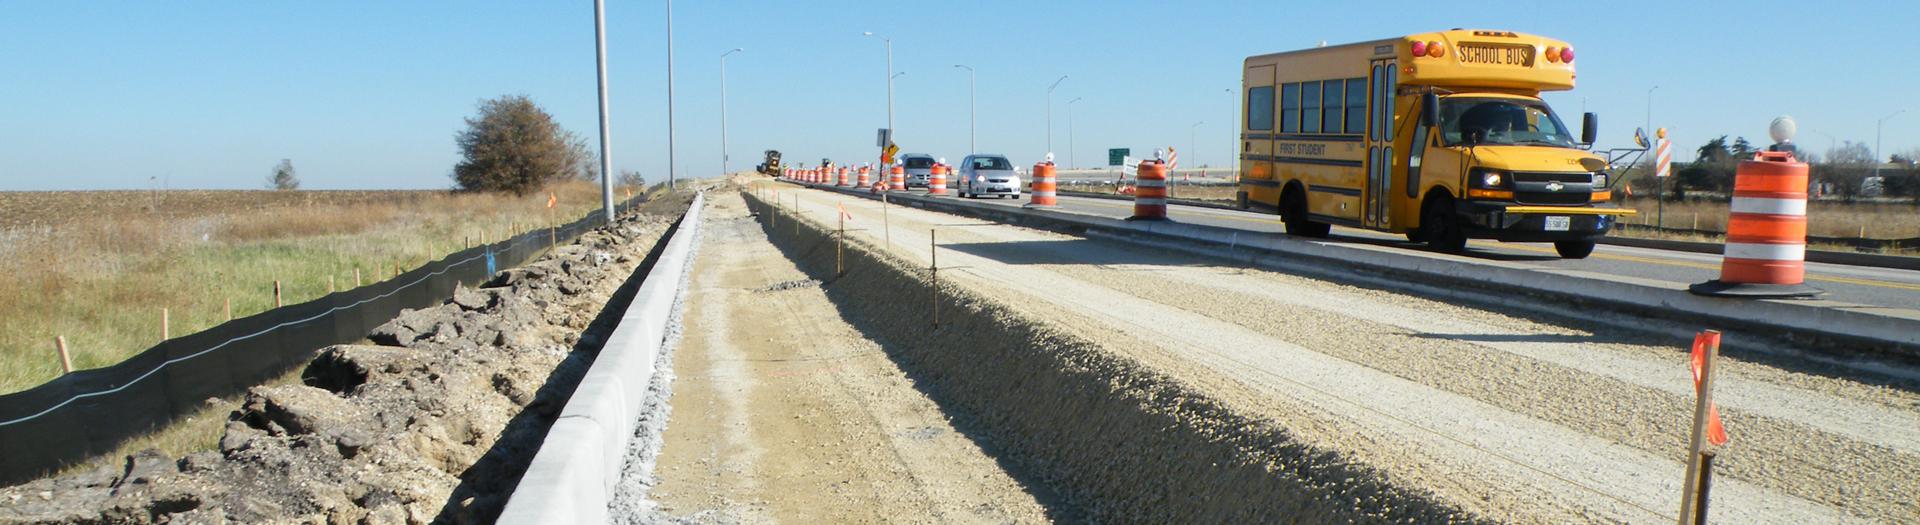 Road construction on I-90